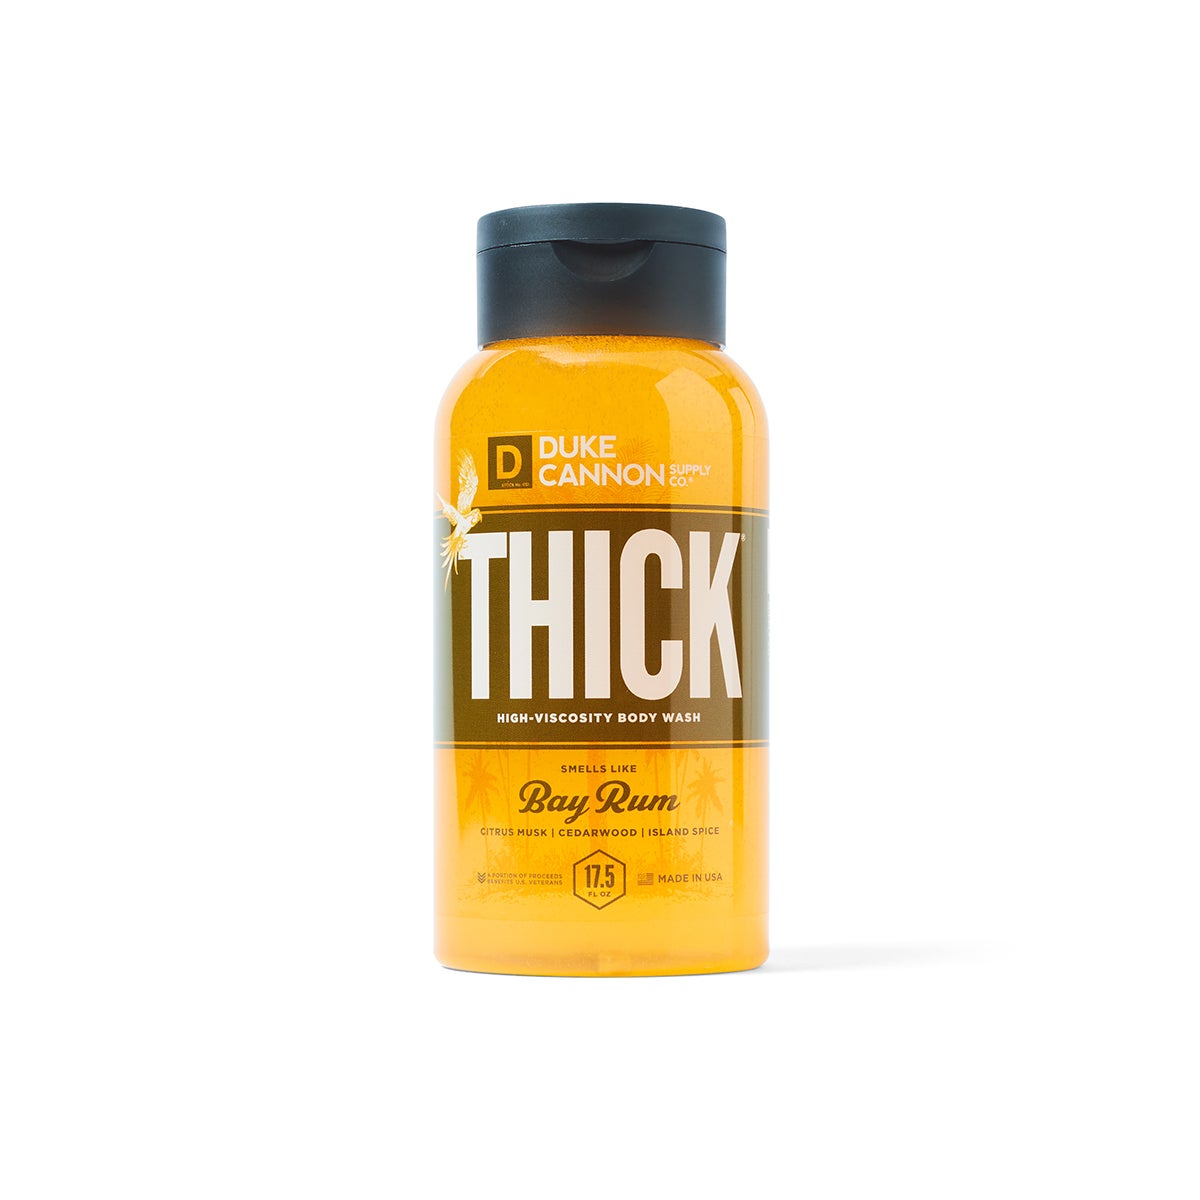 THICK Liquid Shower Soap - Bay Rum